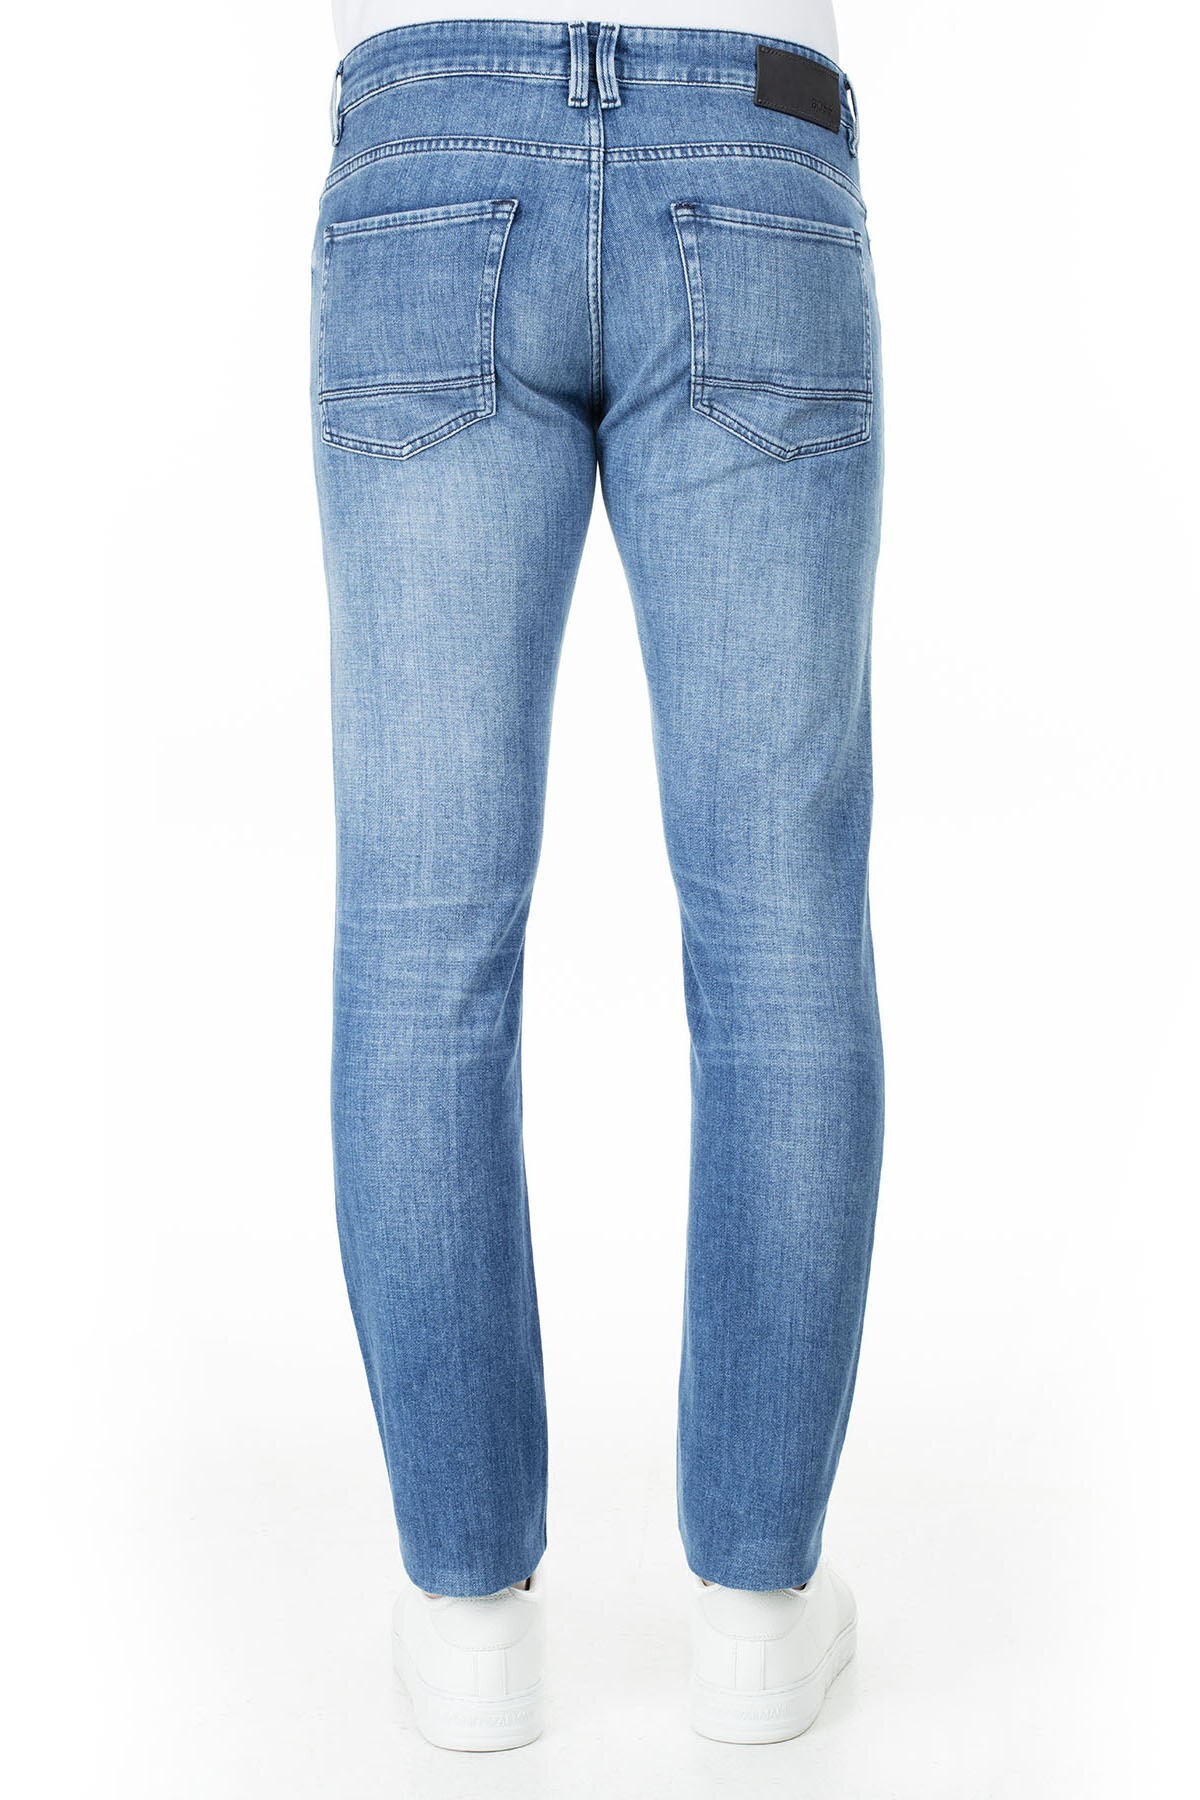 Hugo Boss Slim Fit Jeans Erkek Kot Pantolon 50426456 440 MAVİ